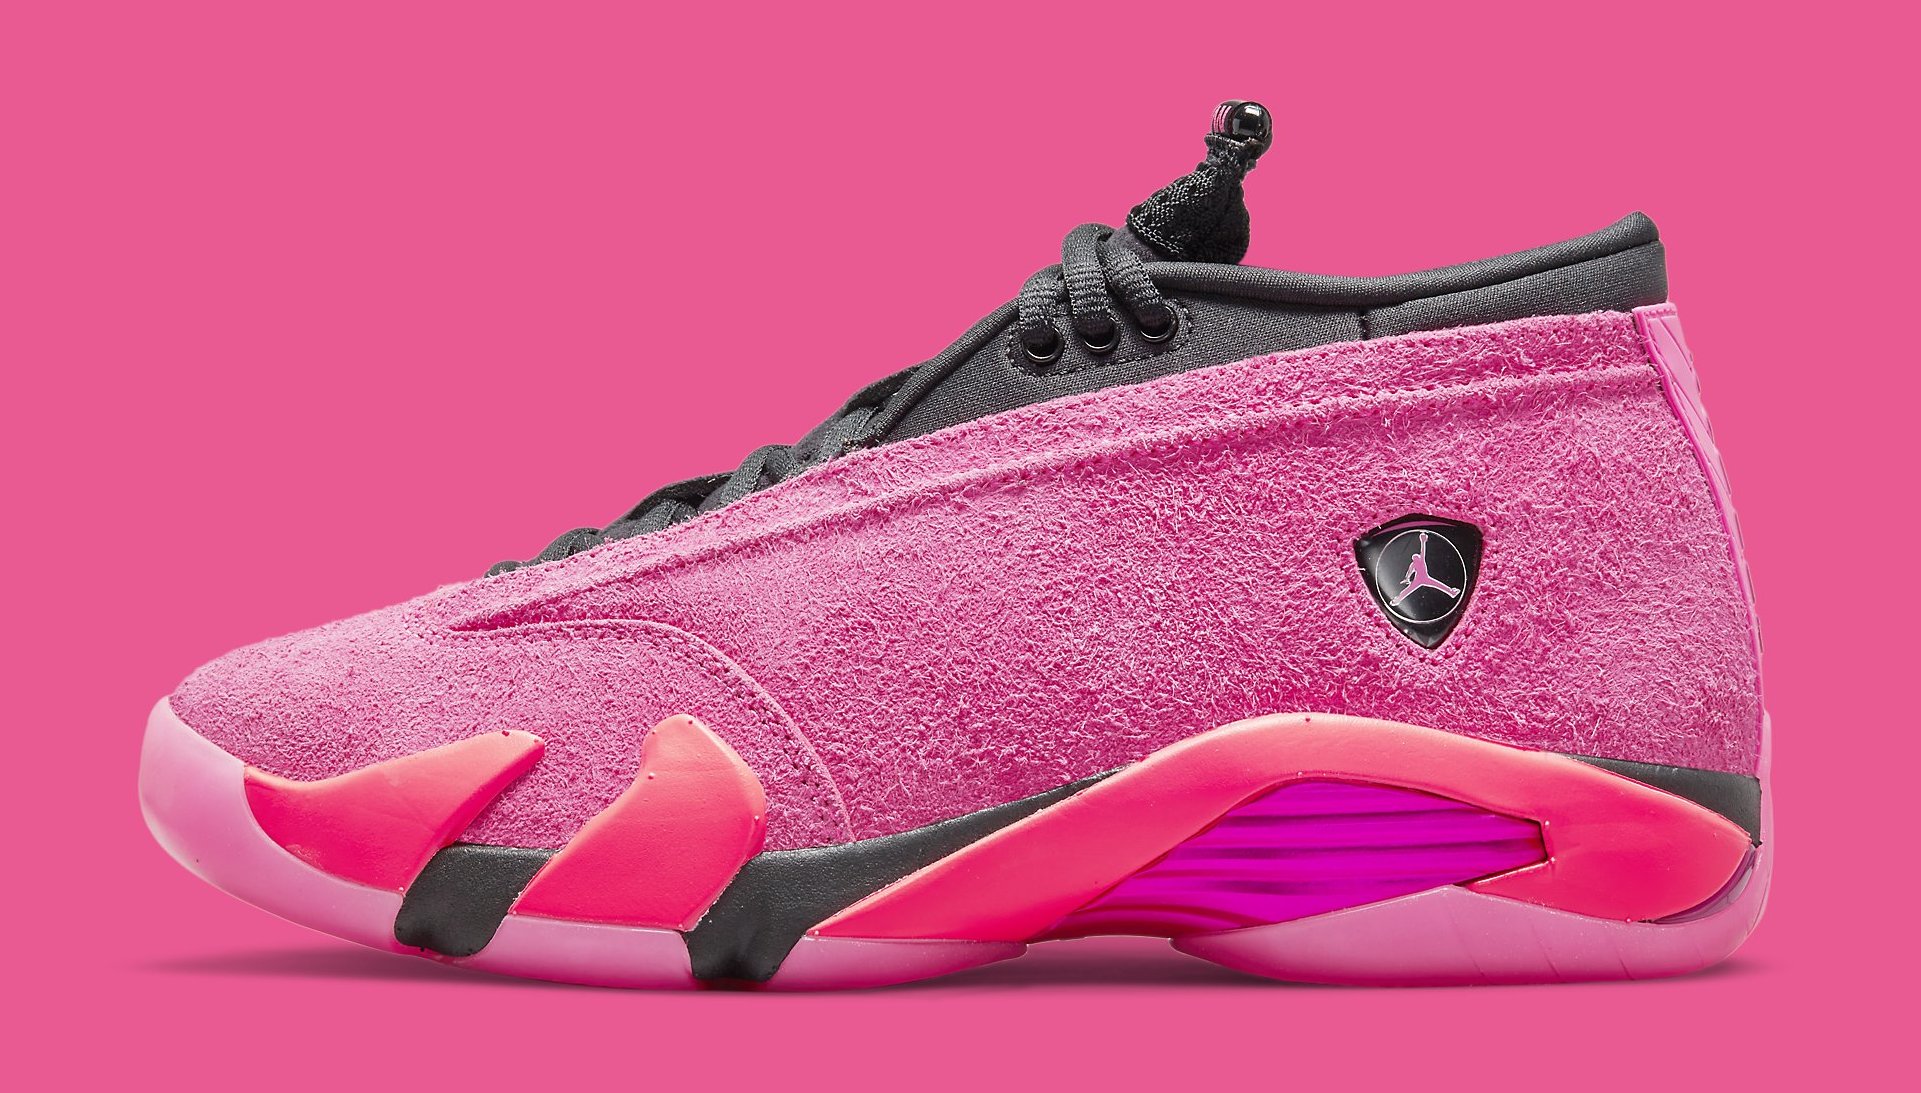 Air Jordan 14 Women&#x27;s &#x27;Shocking Pink&#x27; DH4121 600 Lateral